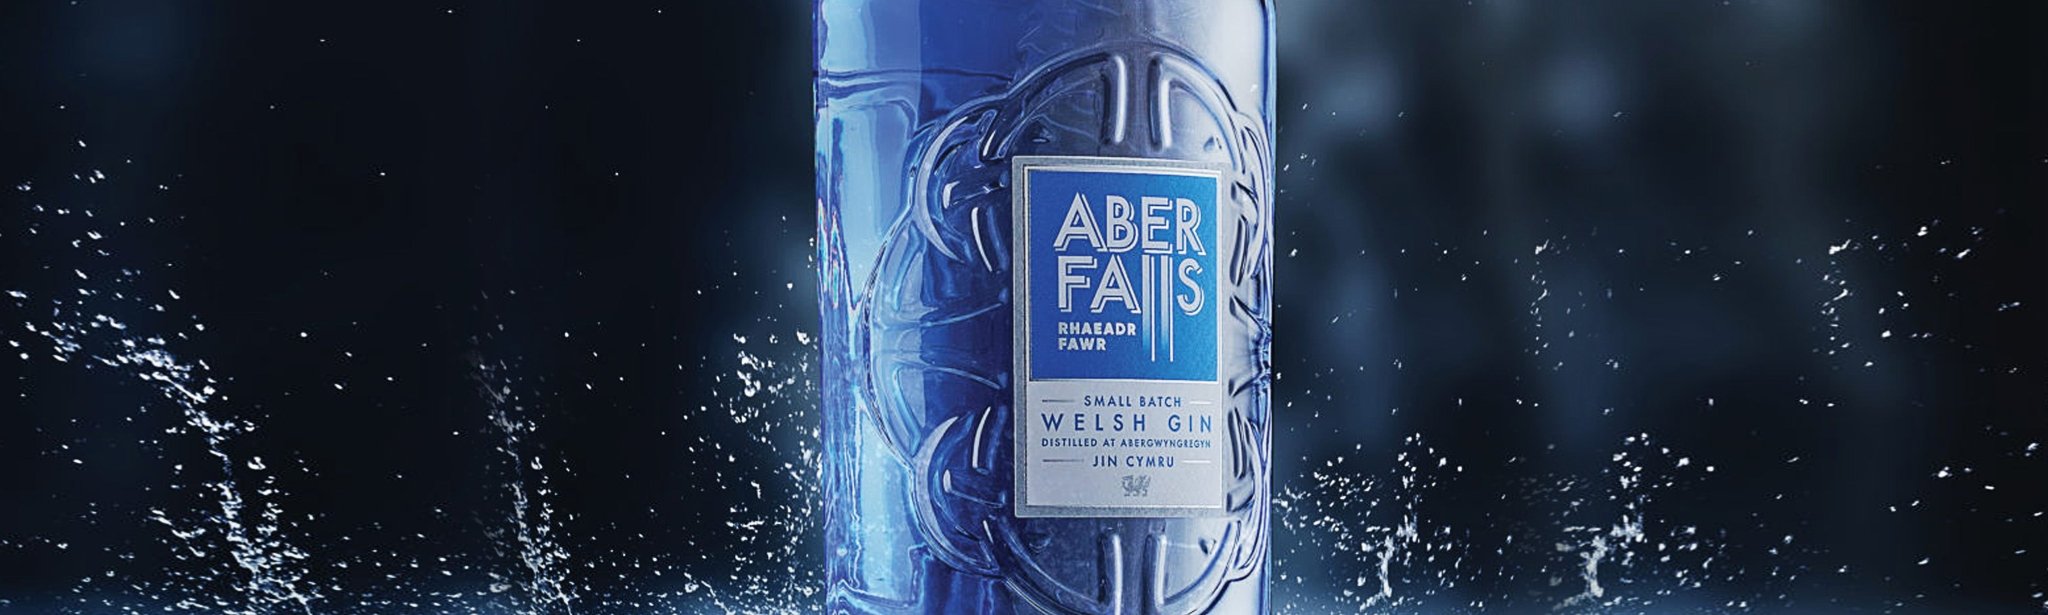 Aber Falls - The Bottle Club